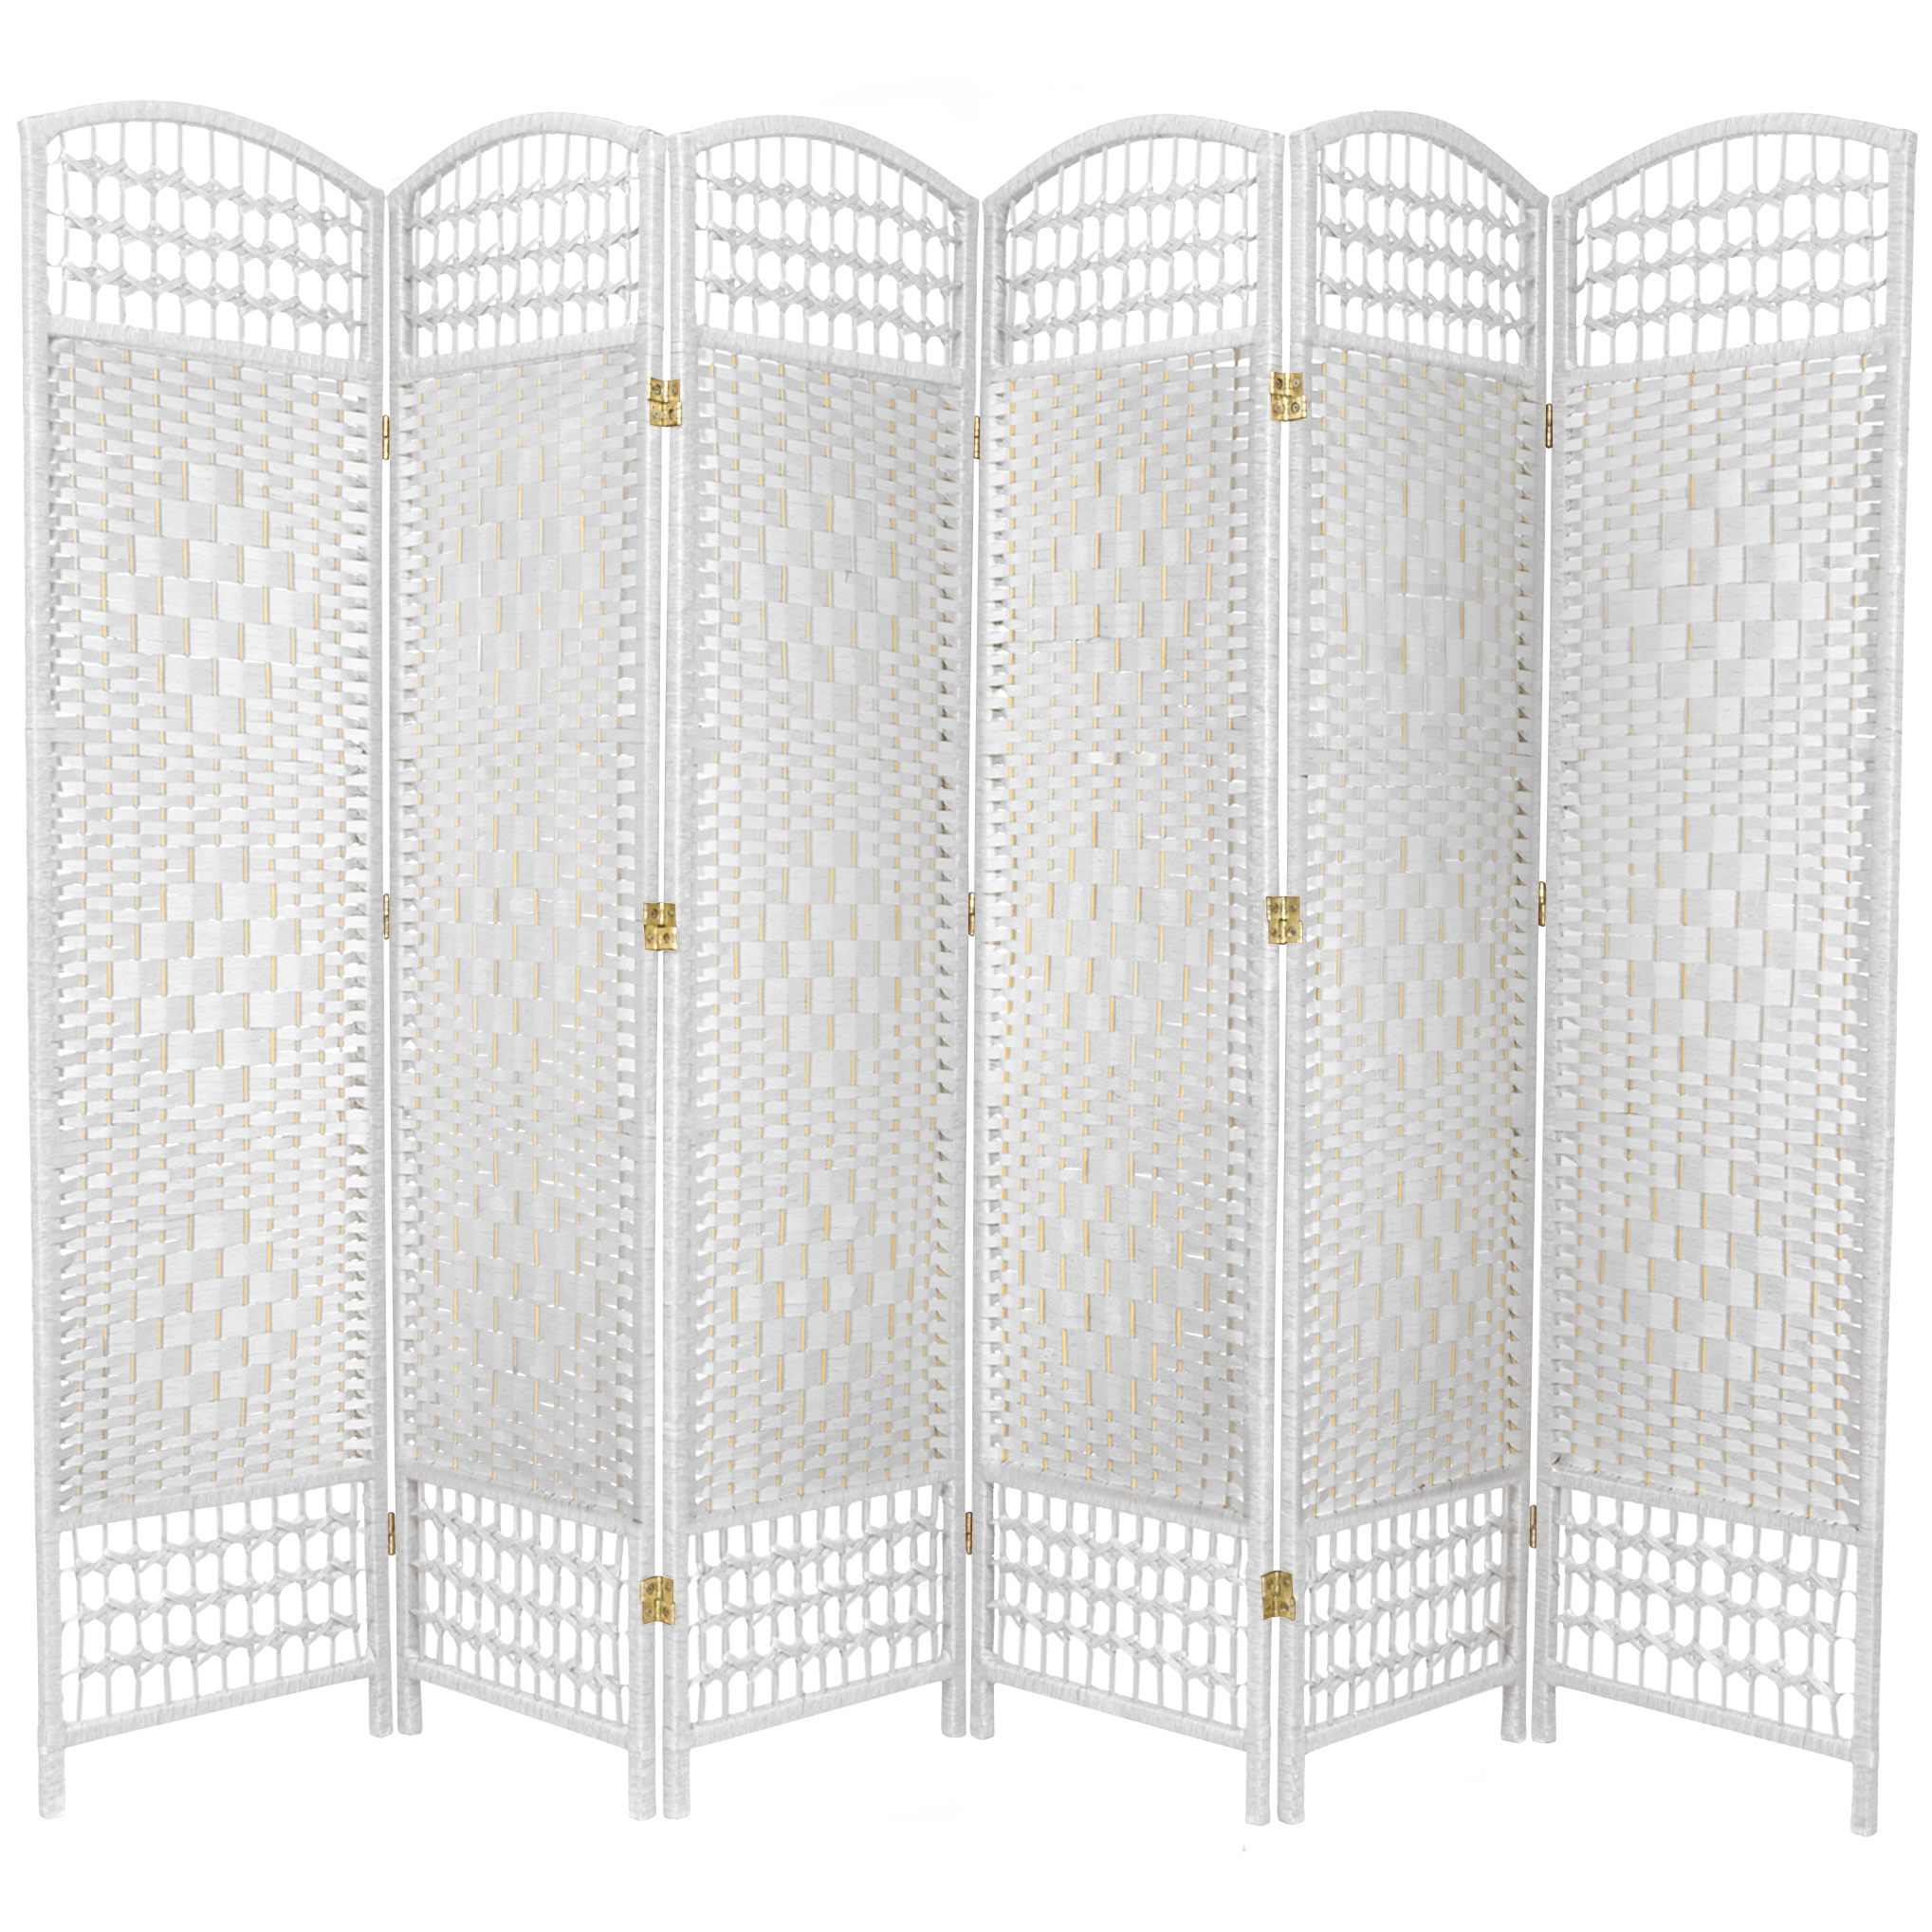 Oriental Furniture 5 1/2 ft. Tall Fiber Weave Room Divider - White - 6 Panel - image 1 of 3